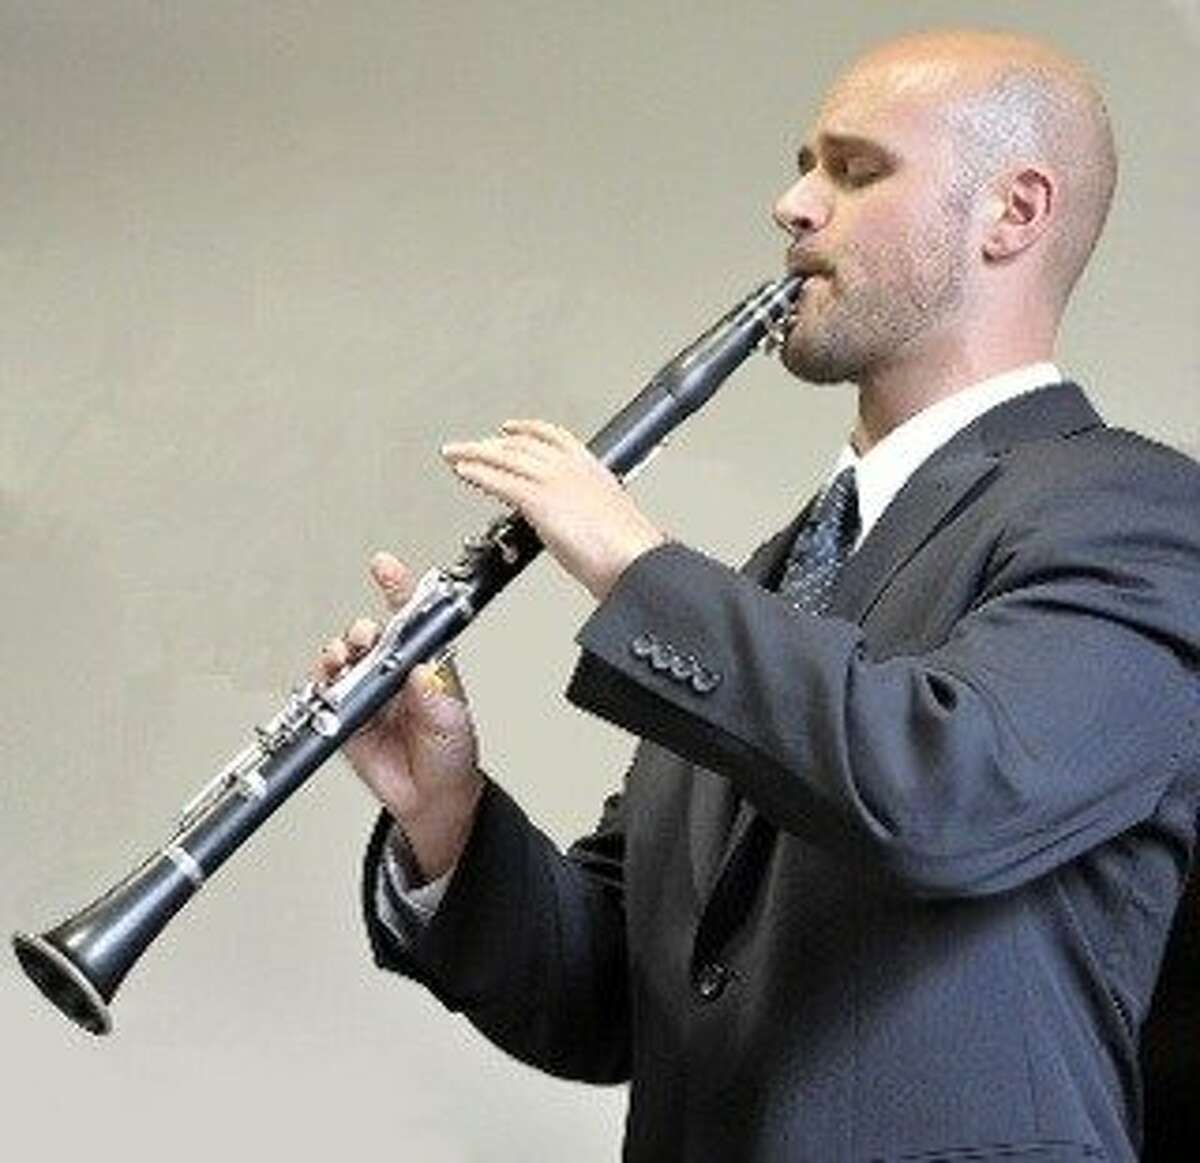 Clarinettist Bill Kalinkos will play the Aaron Copland clarinet concerto written for Benny Goodman